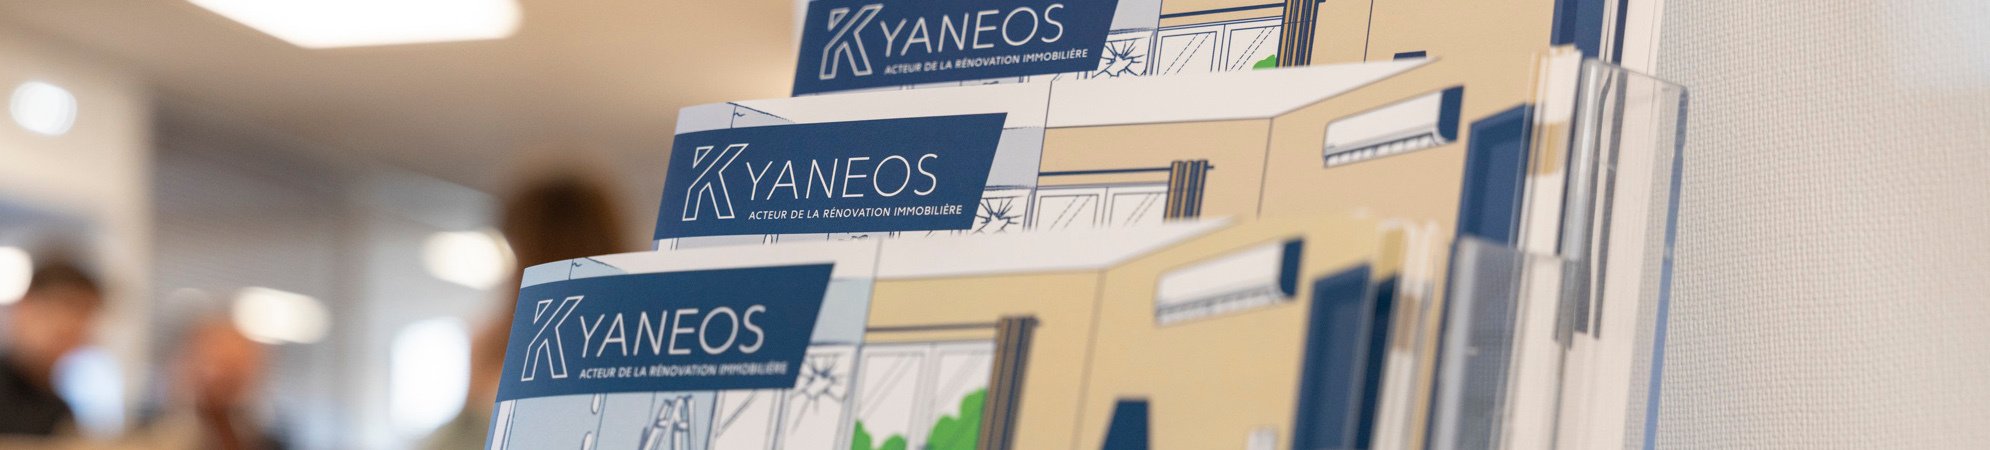 Kyaneos Asset Management